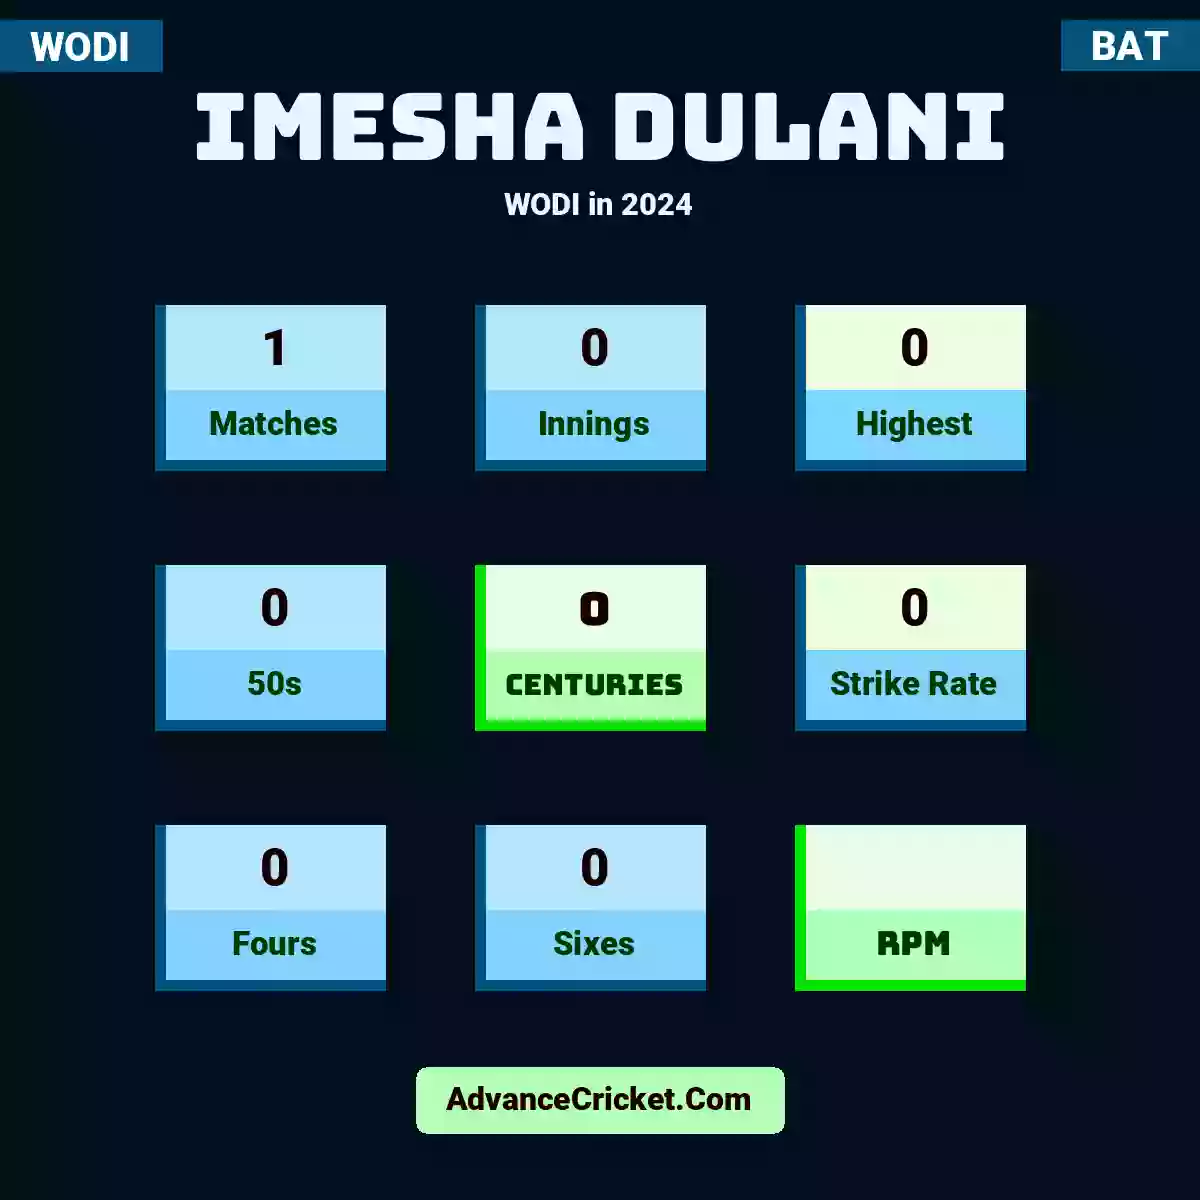 Imesha Dulani WODI  in 2024, Imesha Dulani played 1 matches, scored 0 runs as highest, 0 half-centuries, and 0 centuries, with a strike rate of 0. I.Dulani hit 0 fours and 0 sixes.